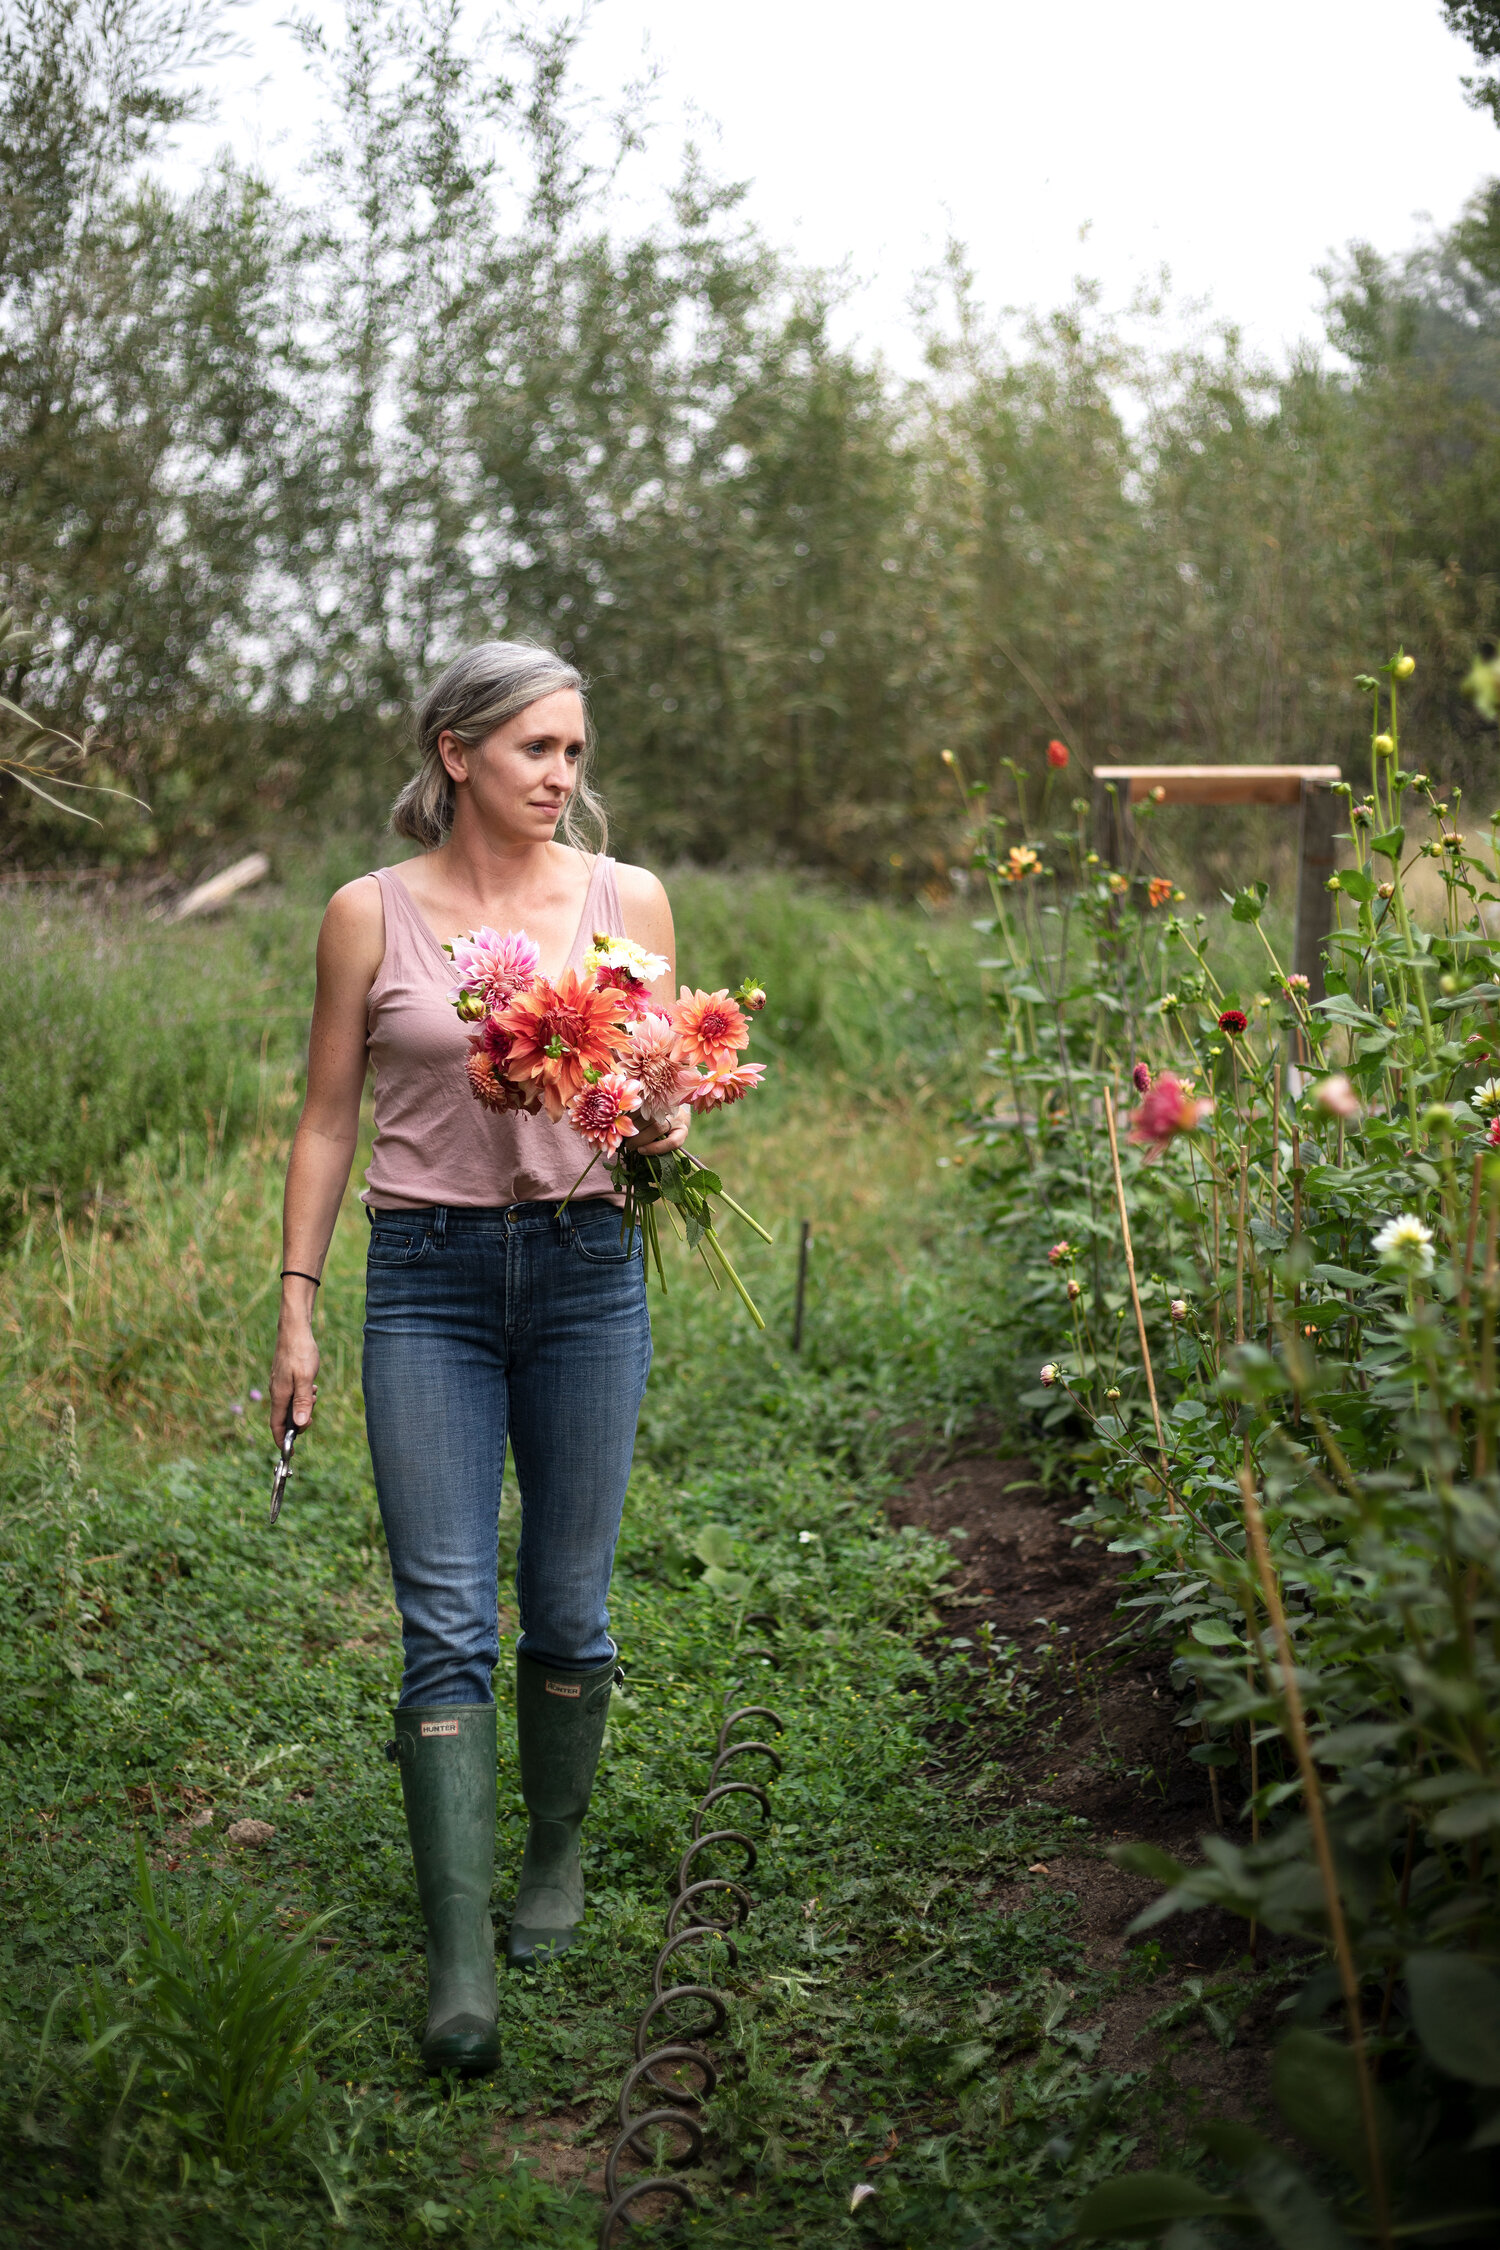 How to Grow a Cut Flower Garden as Impressive as Floret Farm